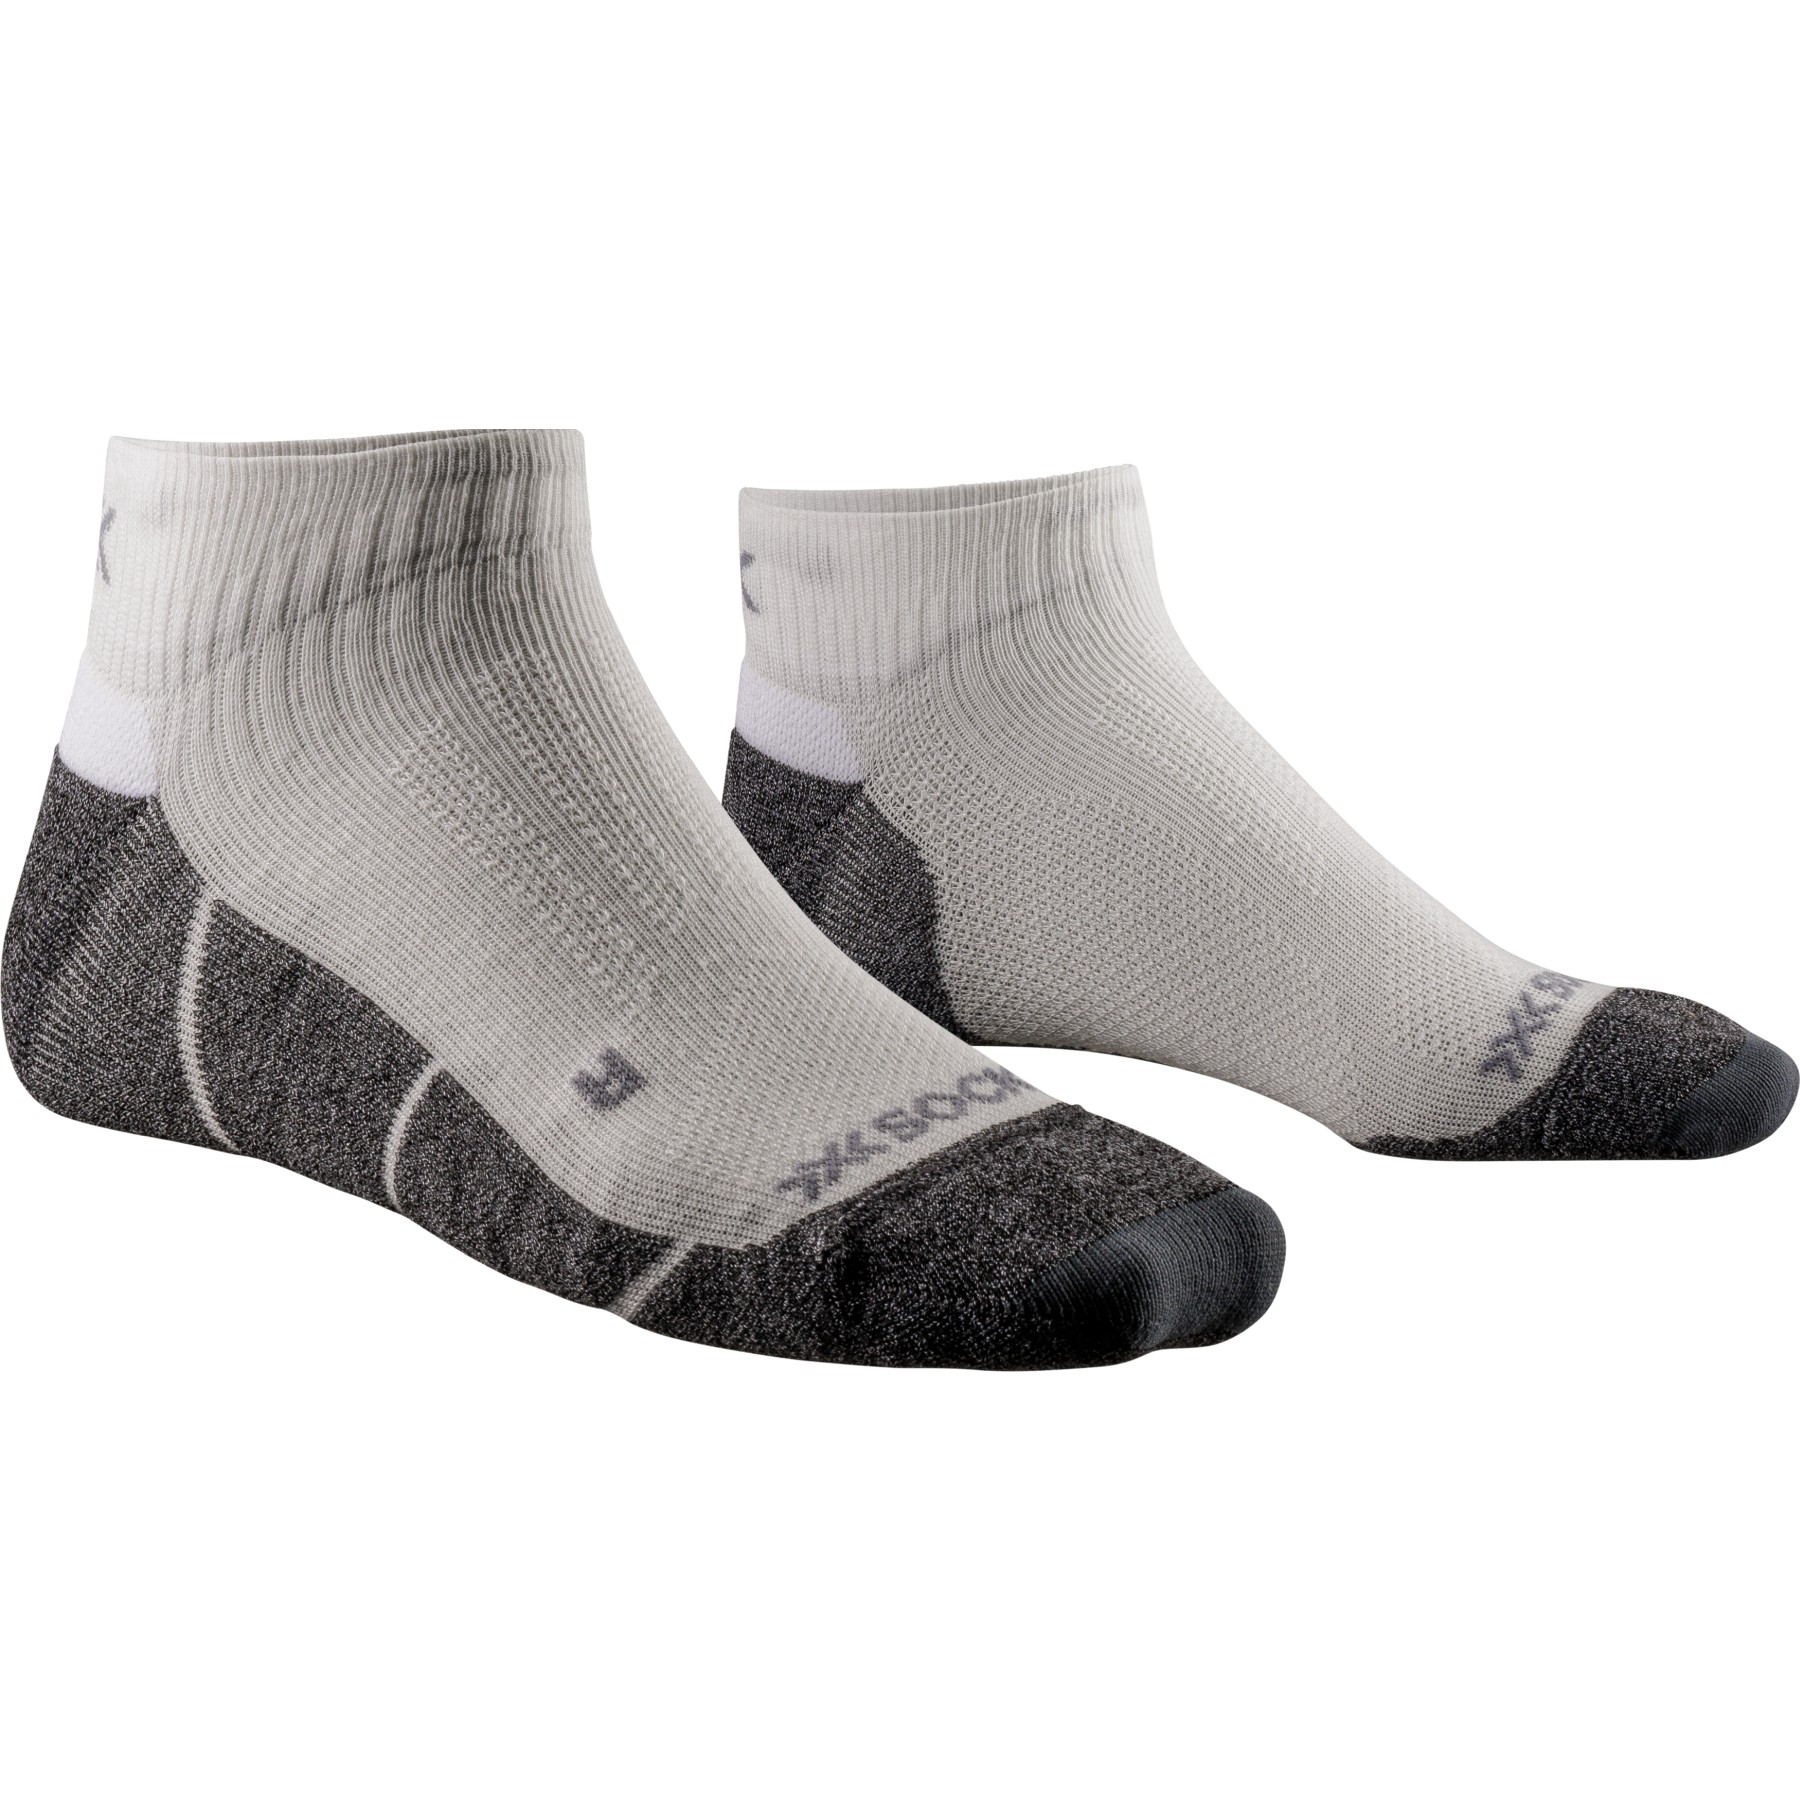 Produktbild von X-Socks Core Natural Low Cut Socken - arctic white/pearl grey